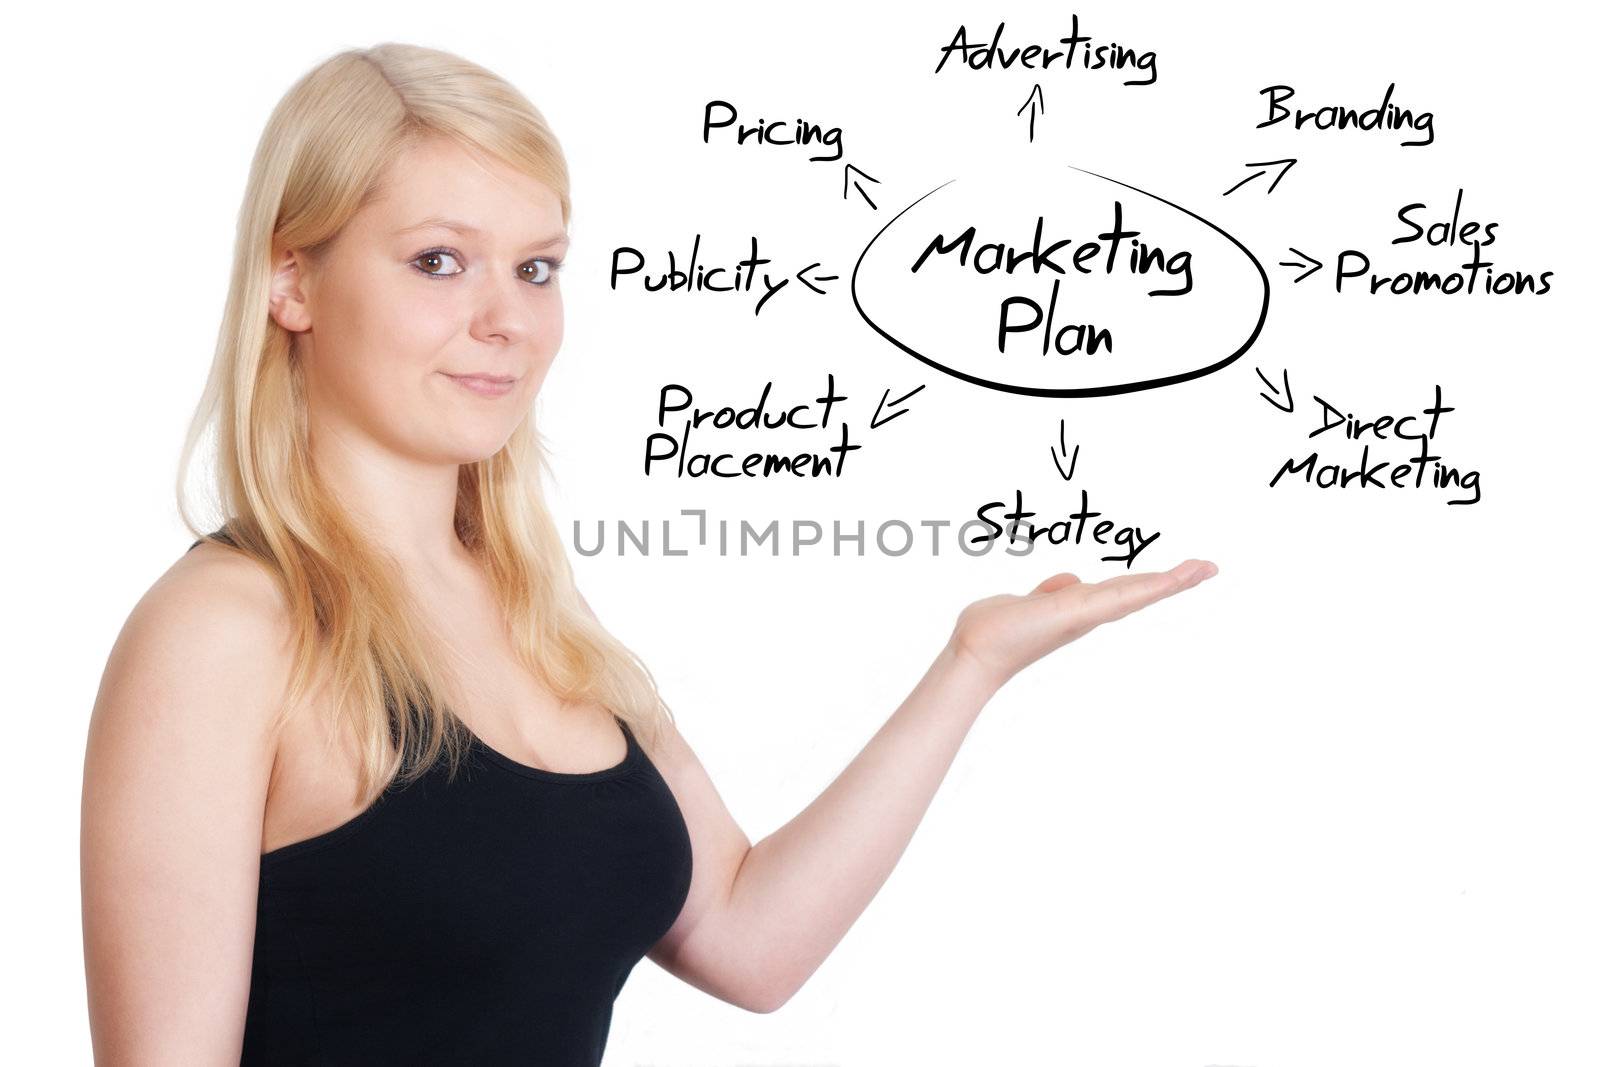 blonde business woman explaining marketing plan on whiteboard